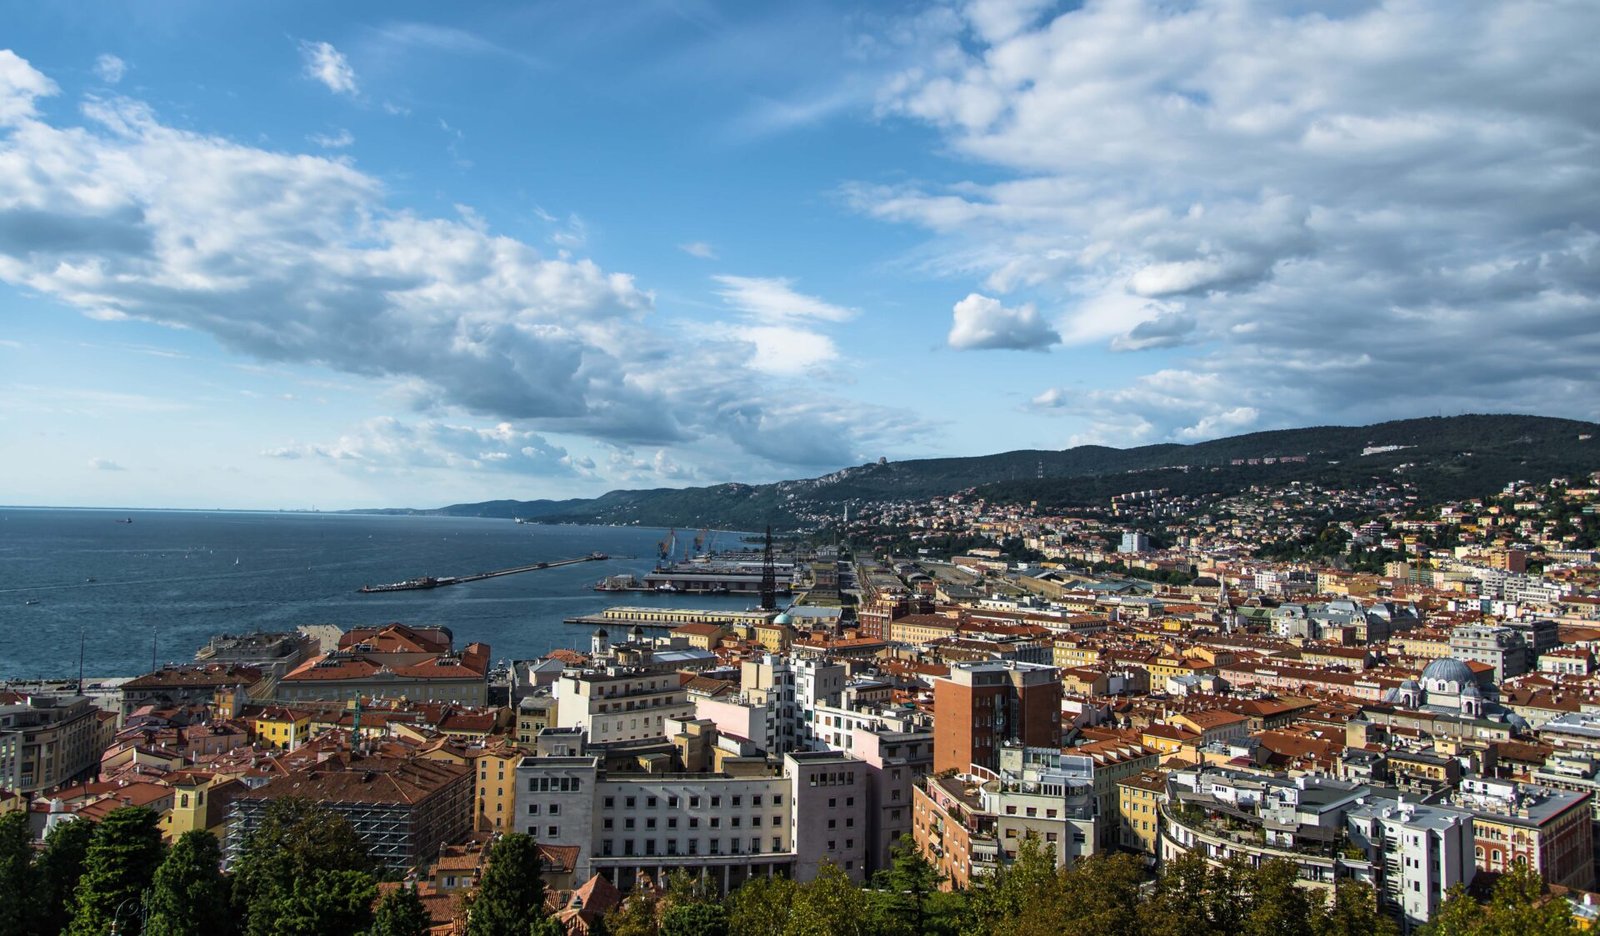 Photographs of Trieste